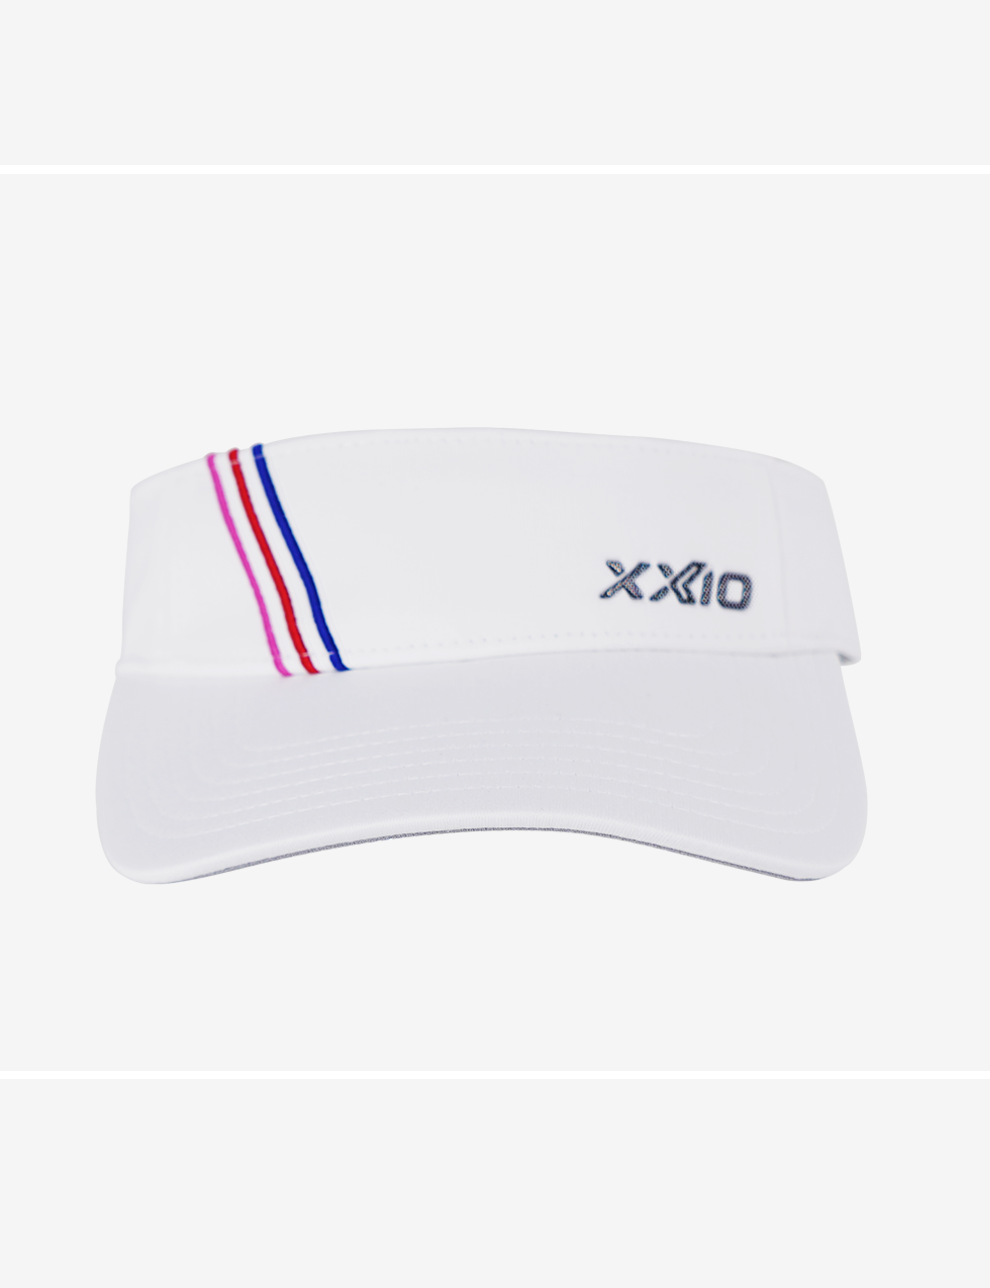 XXIOXX10高尔夫球帽20款女士无顶帽GAH-19070遮阳防晒可调节帽